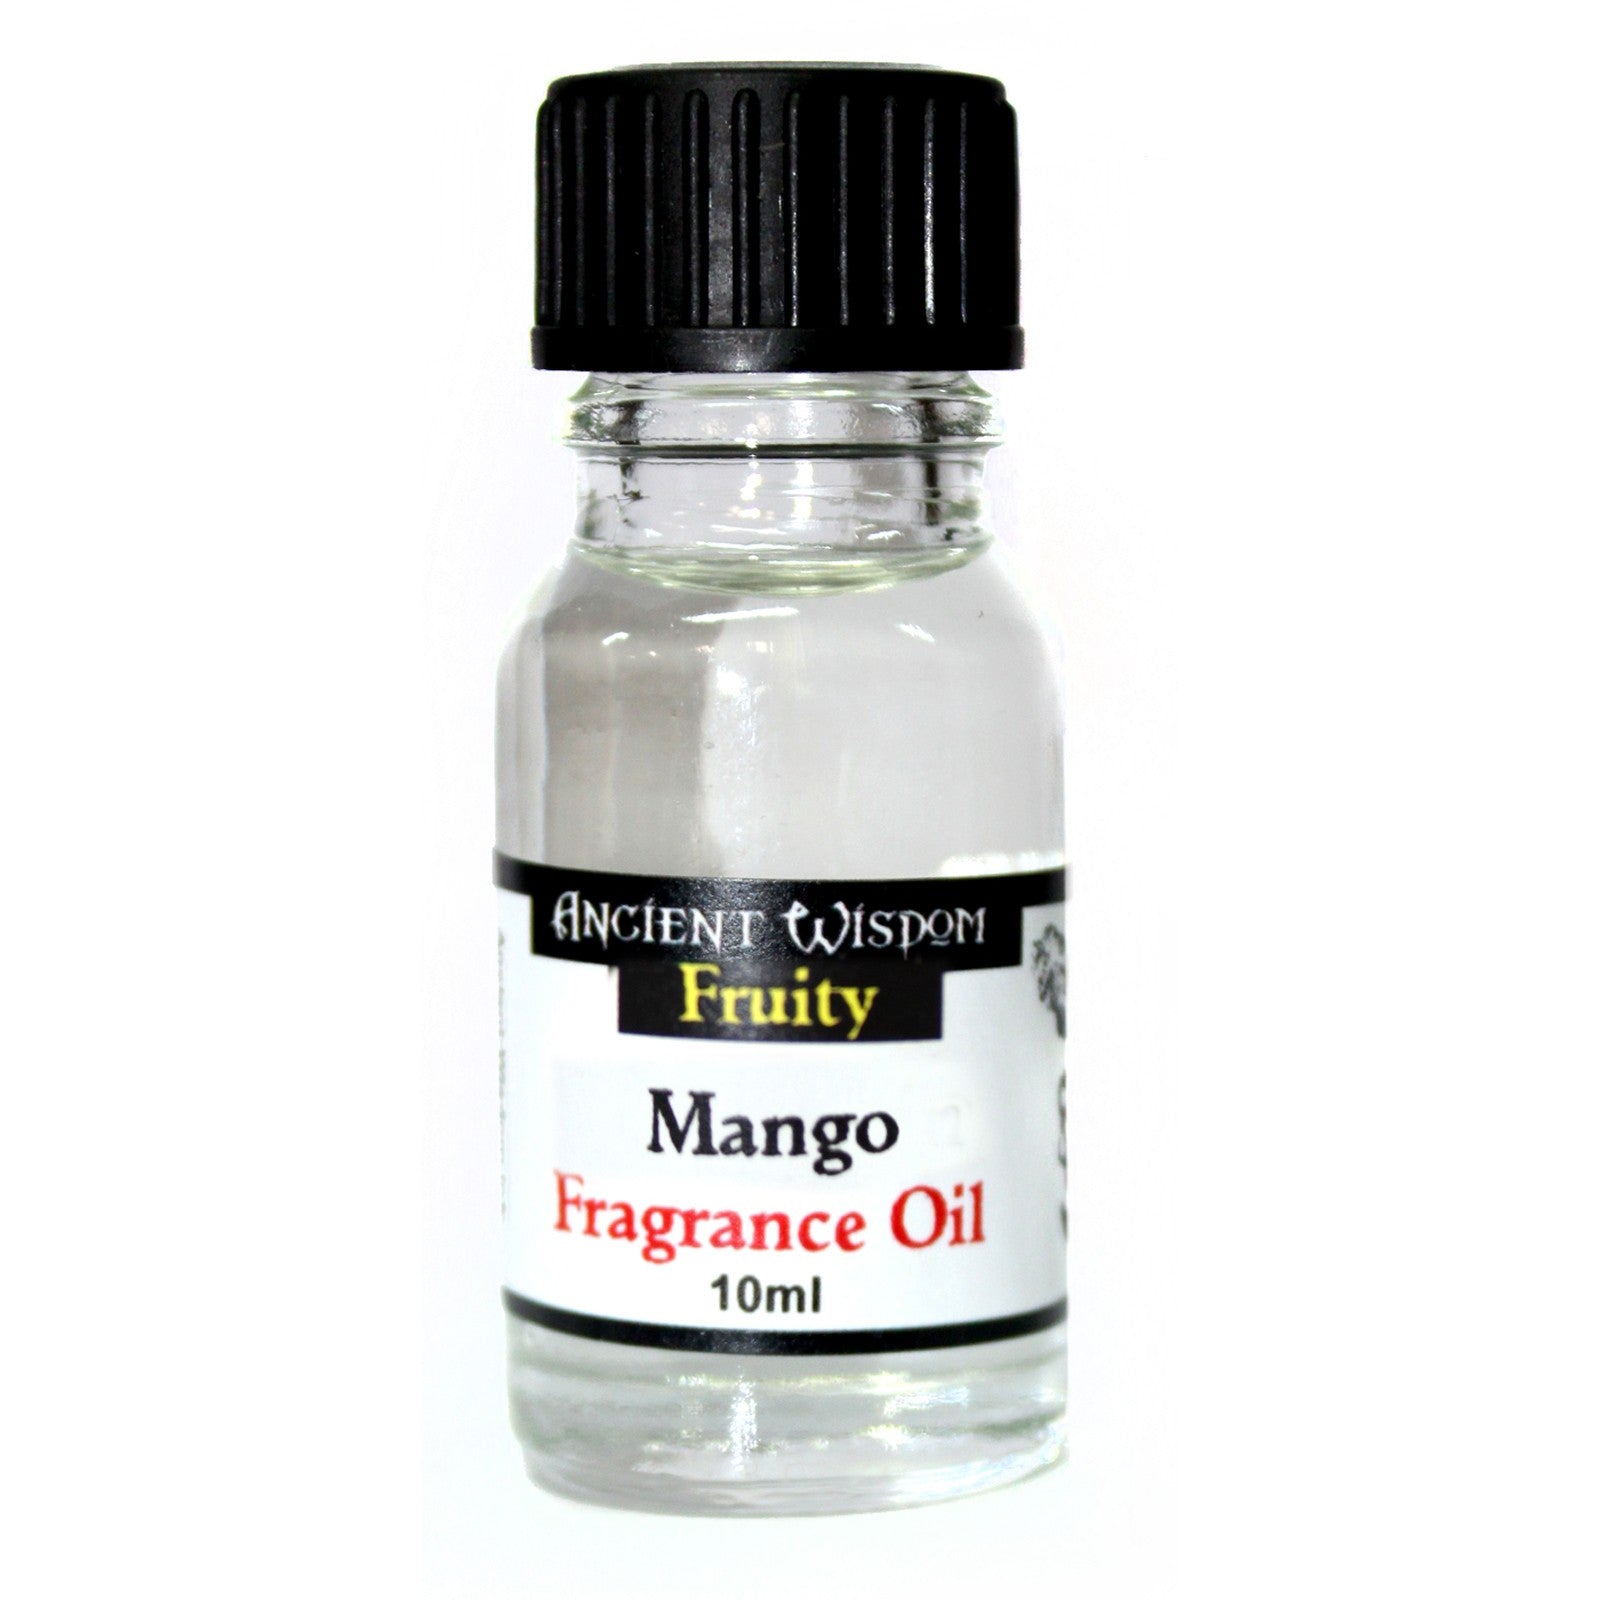 View 10ml Mango Fragrance Oil information